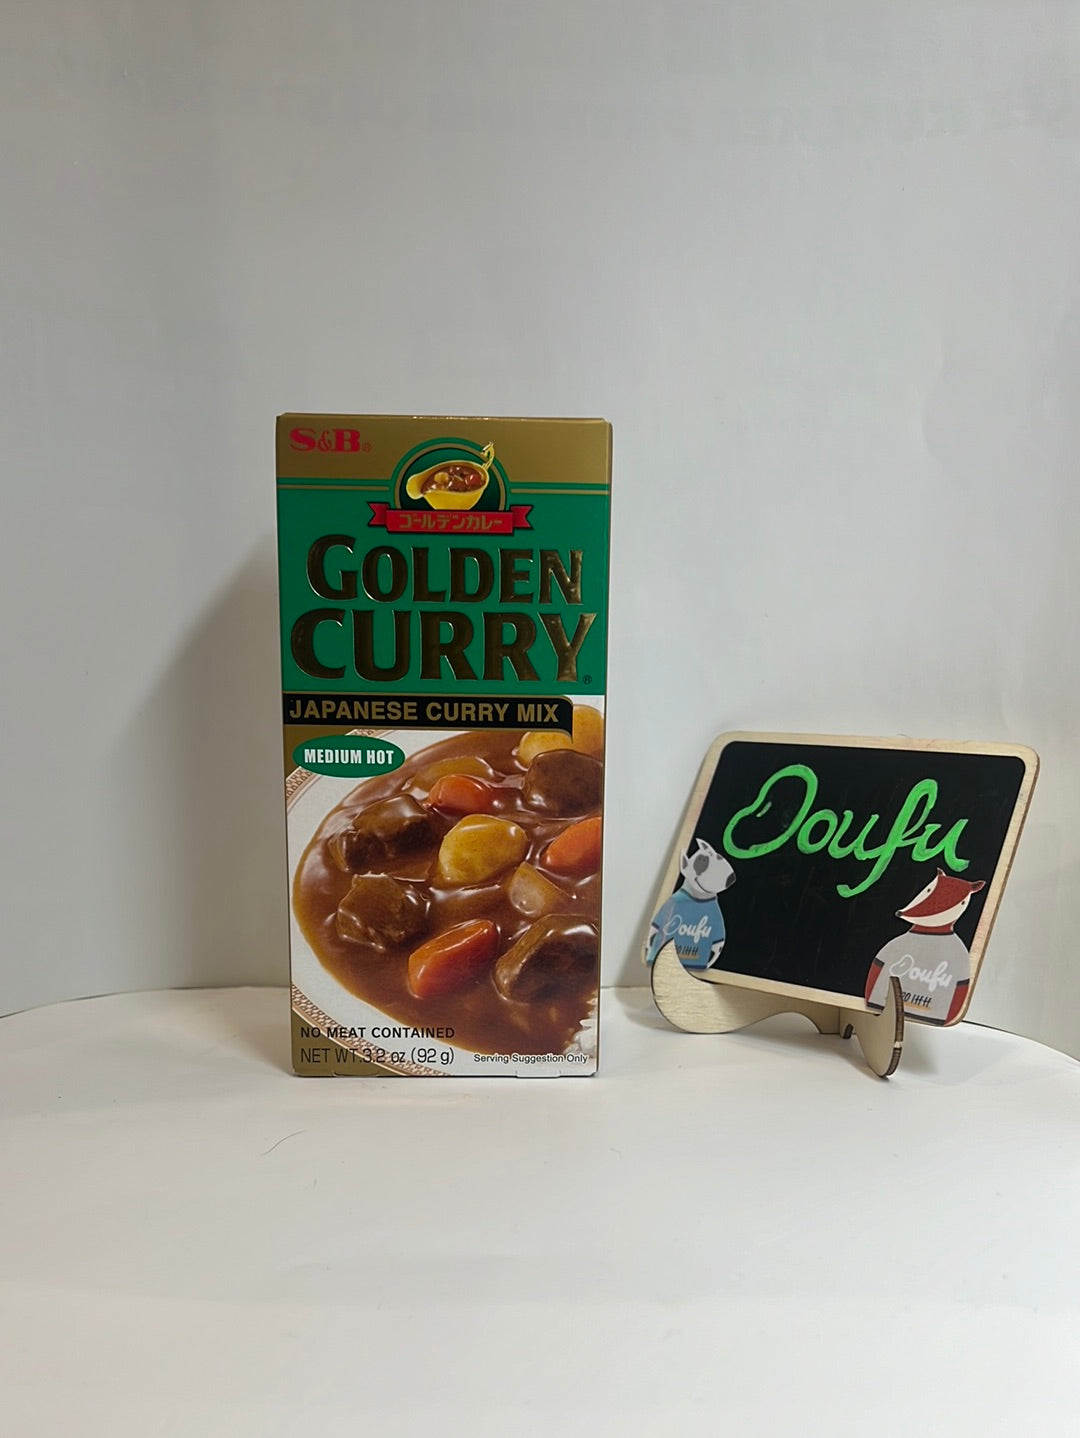 S&B Golden Curry Japanese Curry Mix Medium Hot 金牌咖喱日式咖喱中辣